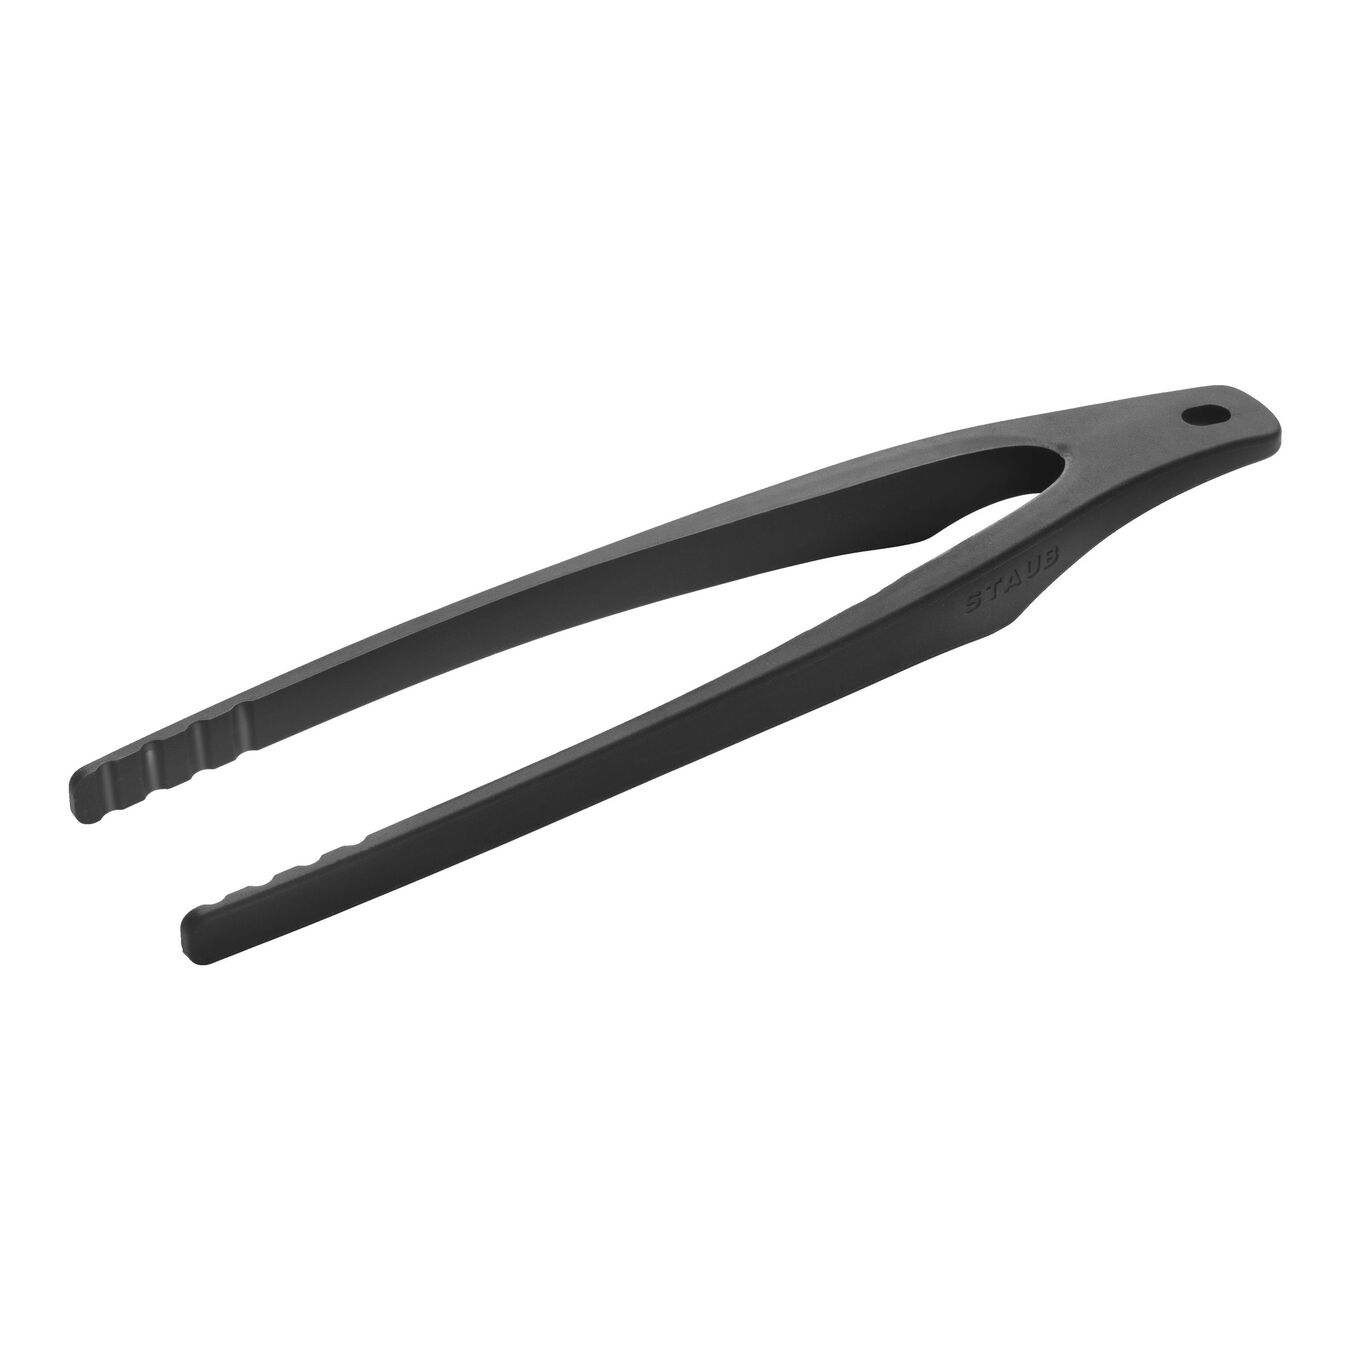 31 cm silicone Tongs, black,,large 1